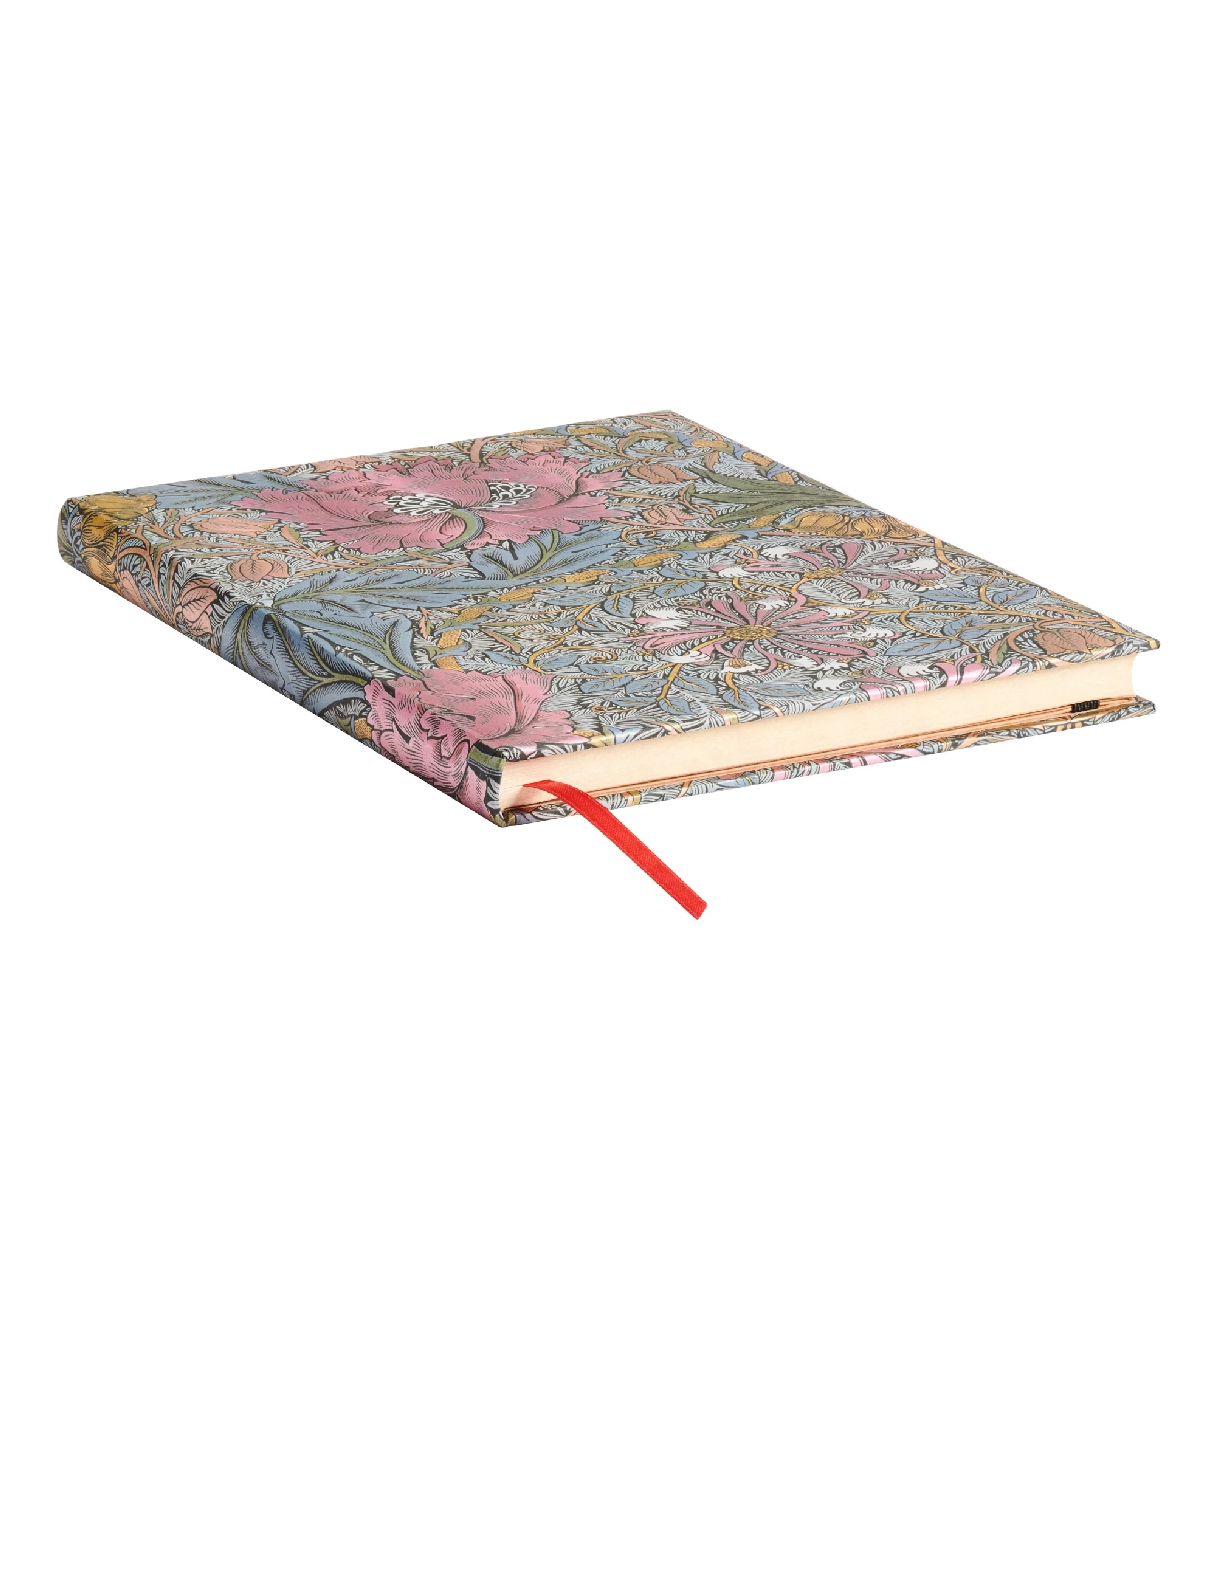 Morris Pink Honeysuckle, William Morris, Hardcover, Ultra, Unlined, Elastic Band Closure, 144 Pg, 120 GSM